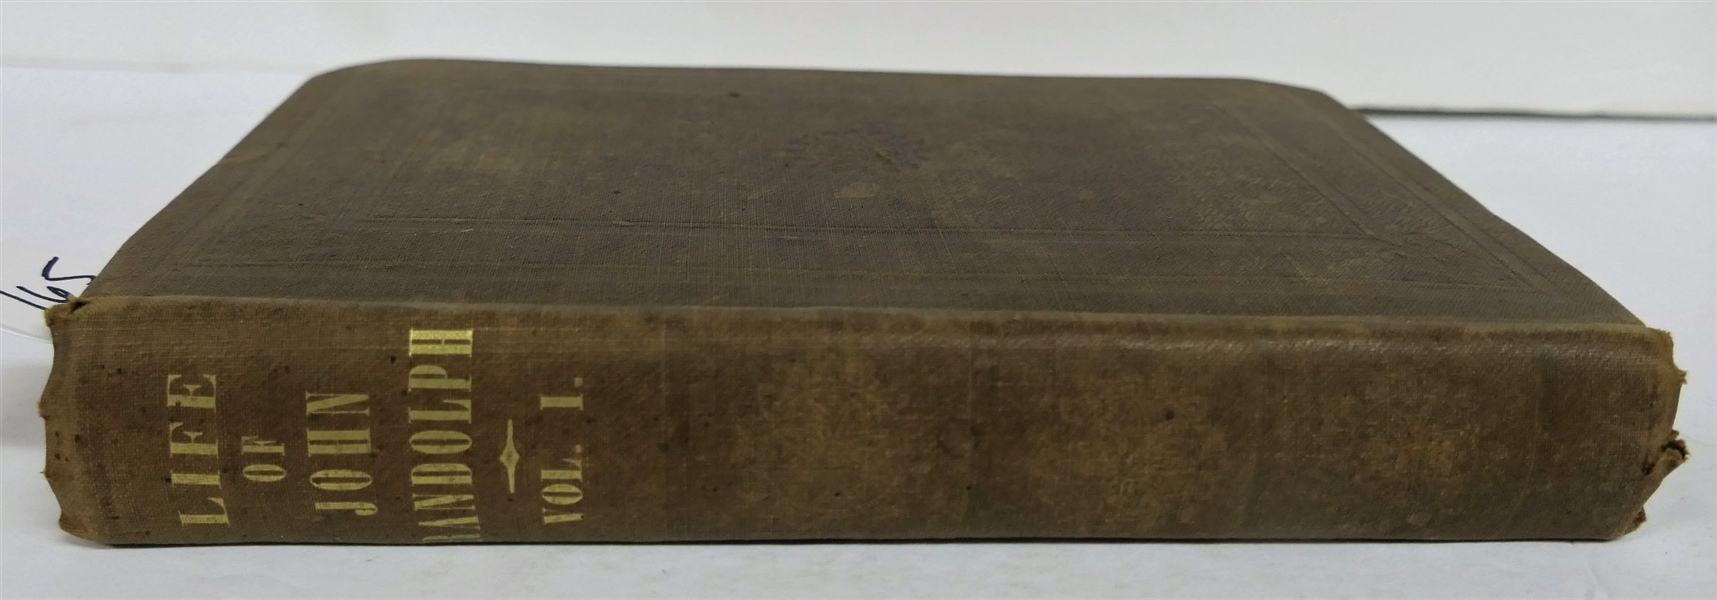 "The Life of John Randolph of Roanoke" by Hugh A. Garland - Vol. I - Published 1850 - Hardback Book 